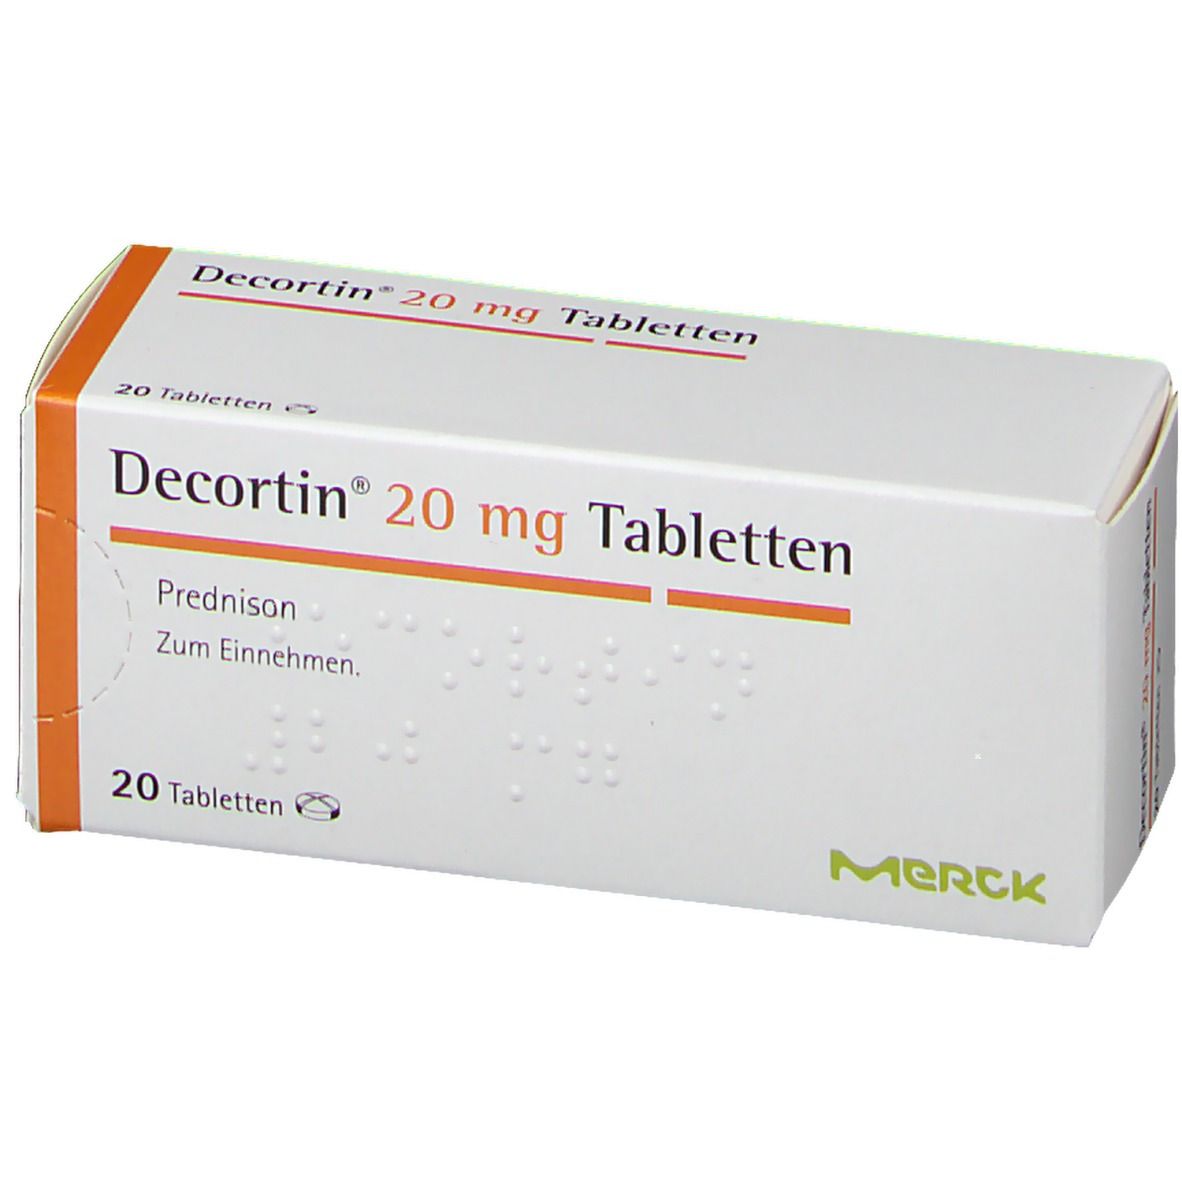 Decortin® 20 mg